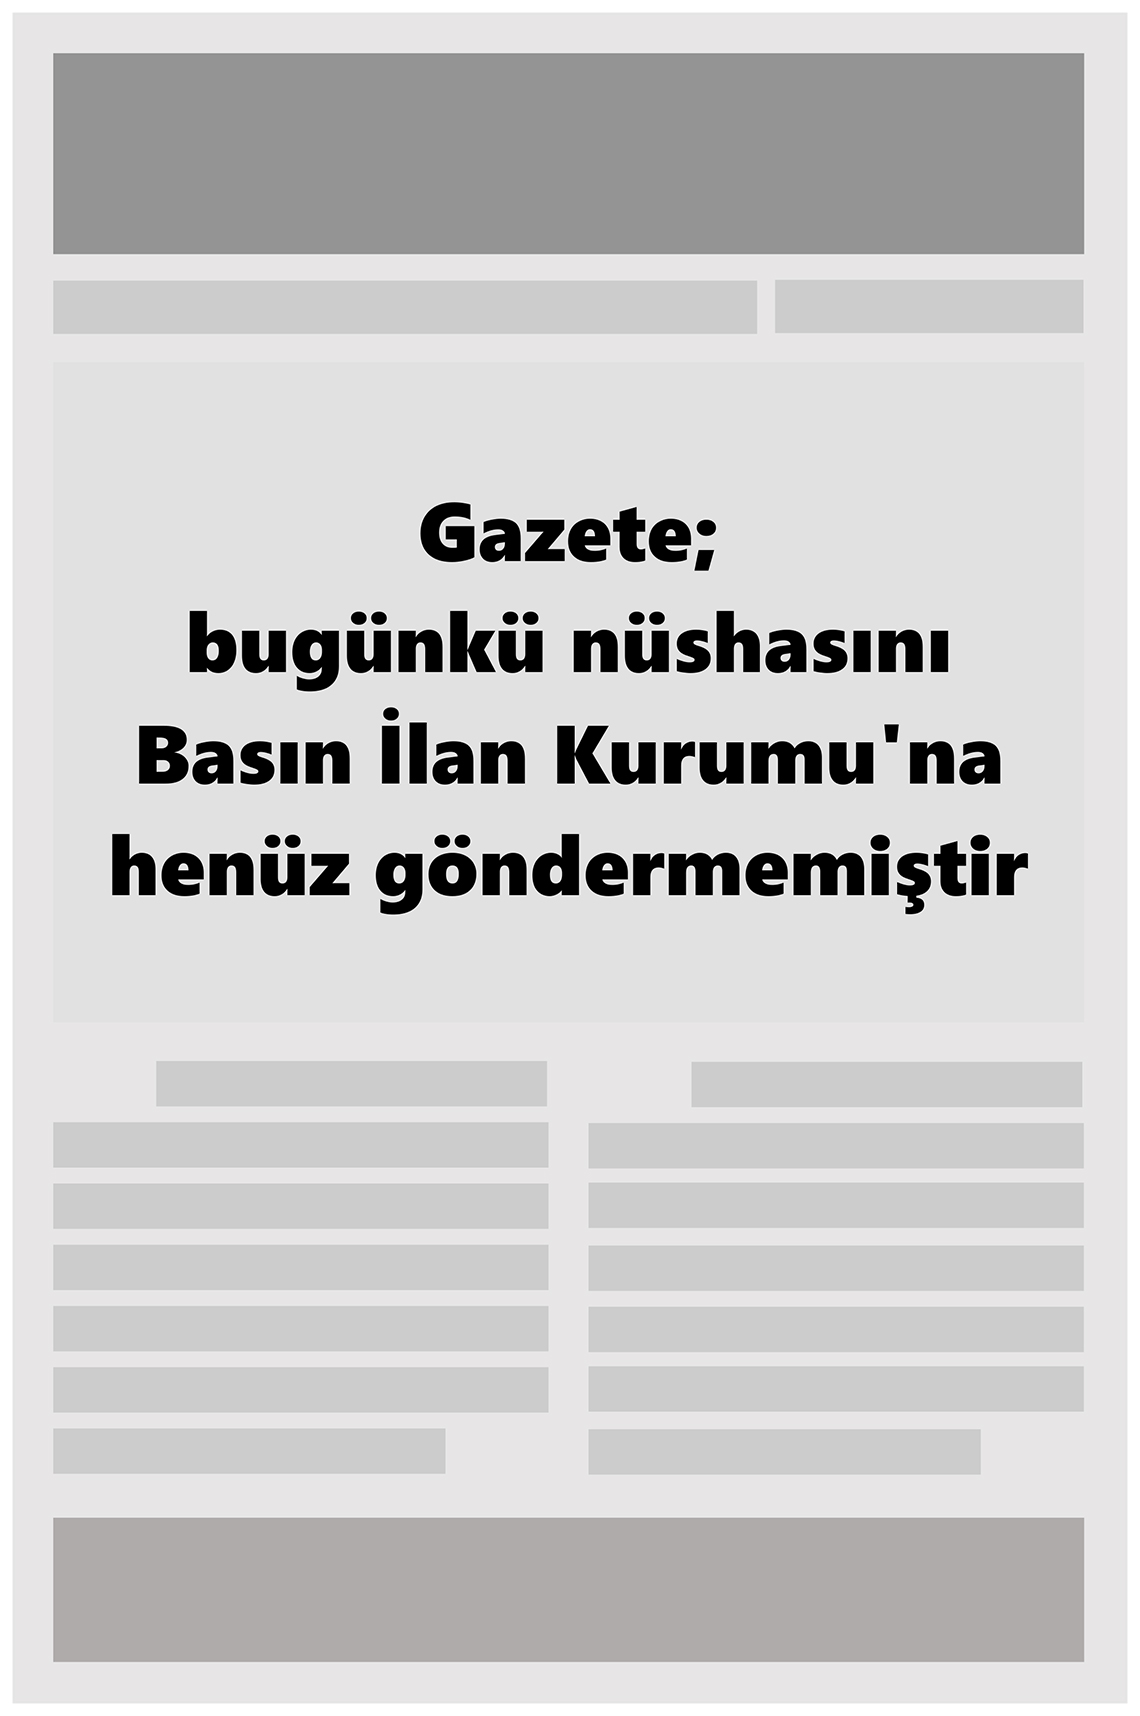 30 Ocak 2023 Yenişehir Yörem Gazete Manşeti